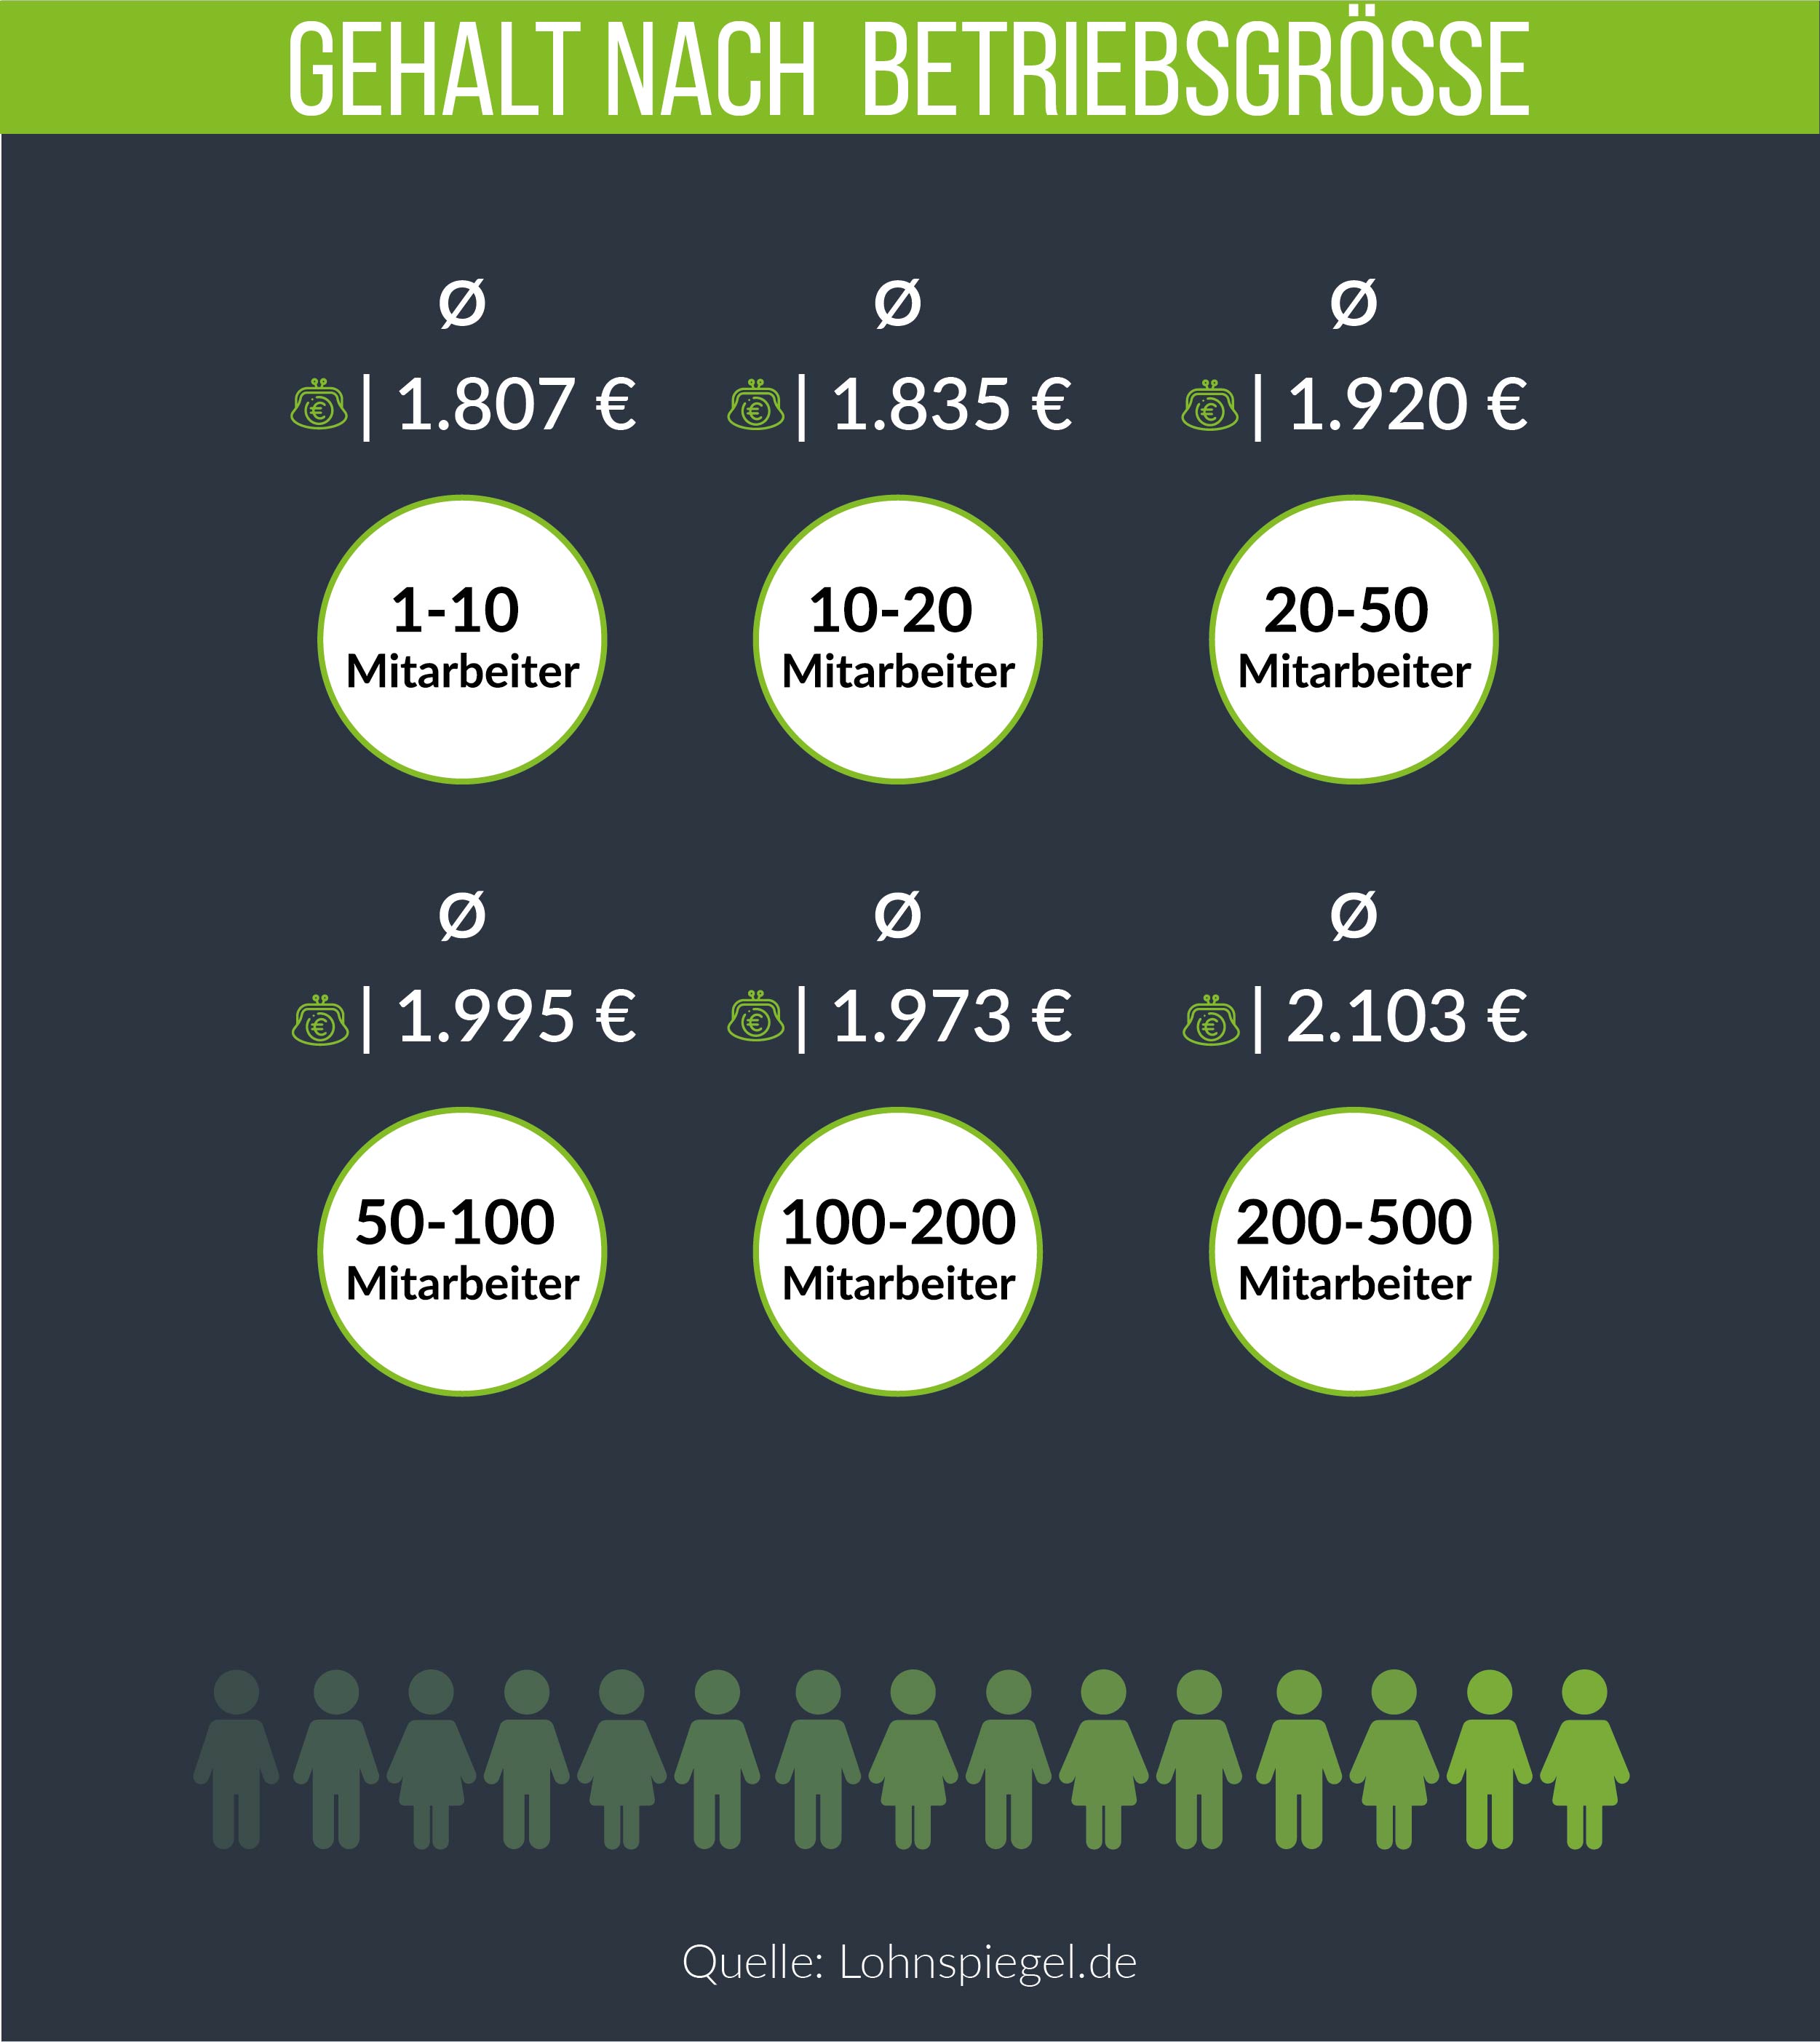 Infografik: Das Gehalt nach Betriebsgröße